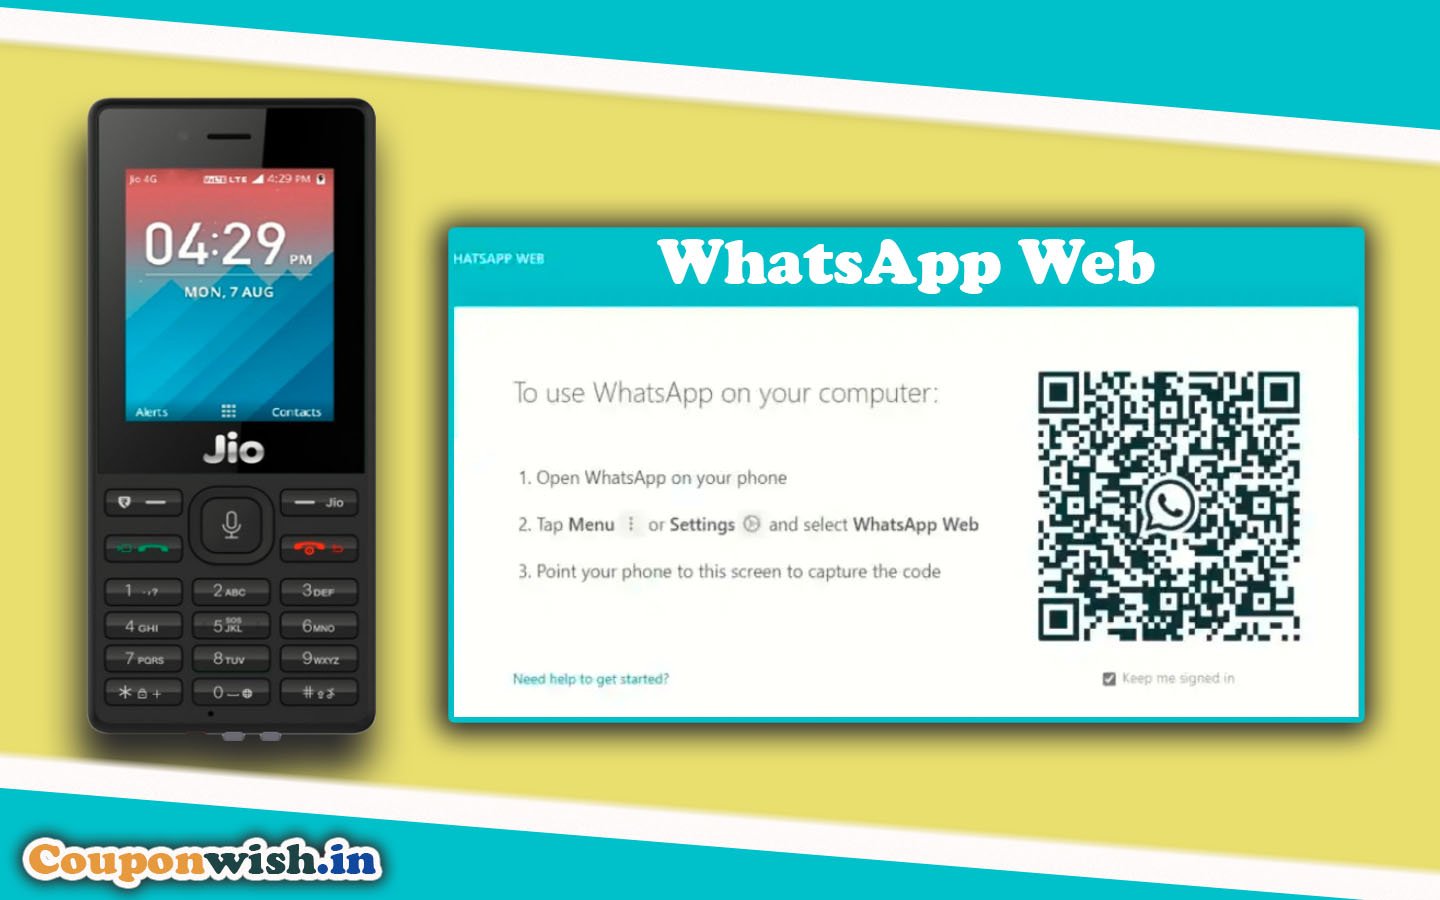 How to use Whatsapp web on Jio phone